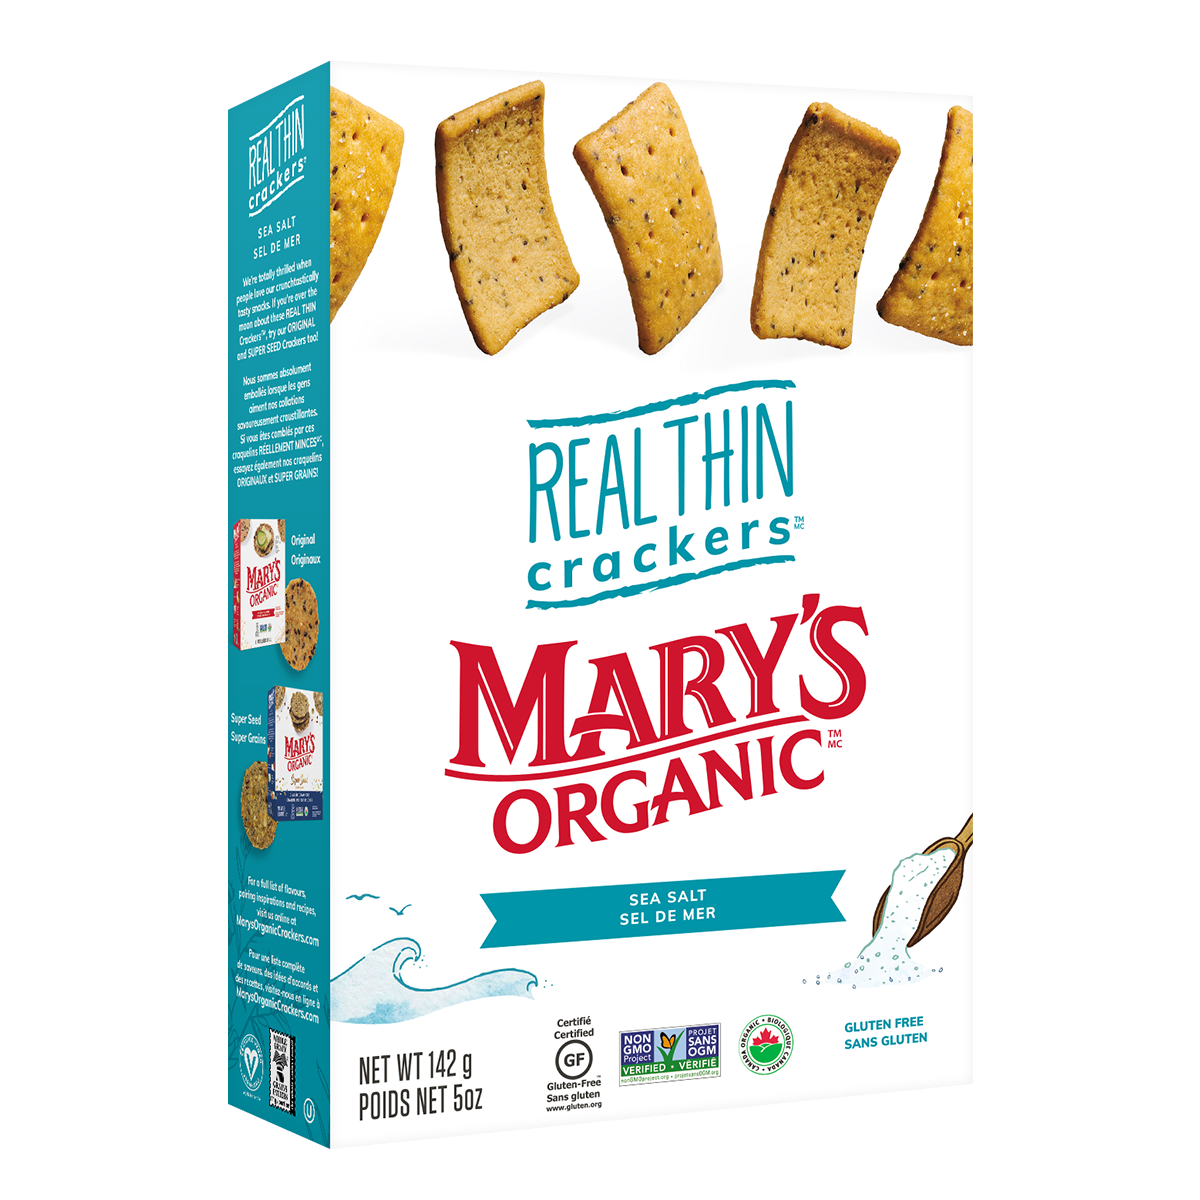 Sea Salt REAL THIN Crackers